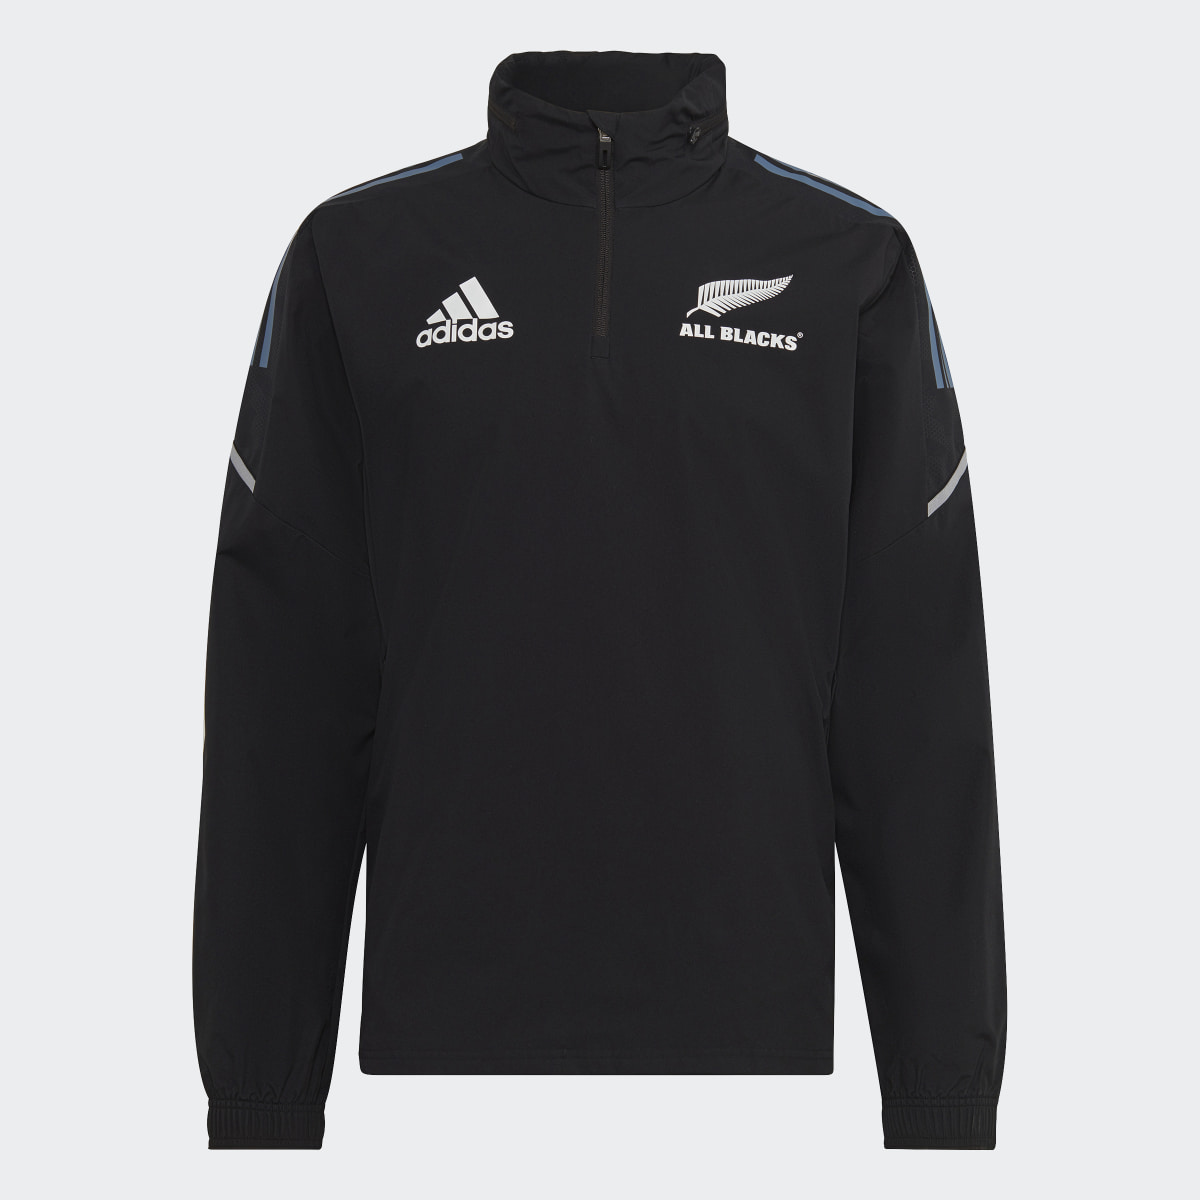 Adidas All Blacks Rugby Windbreaker. 6